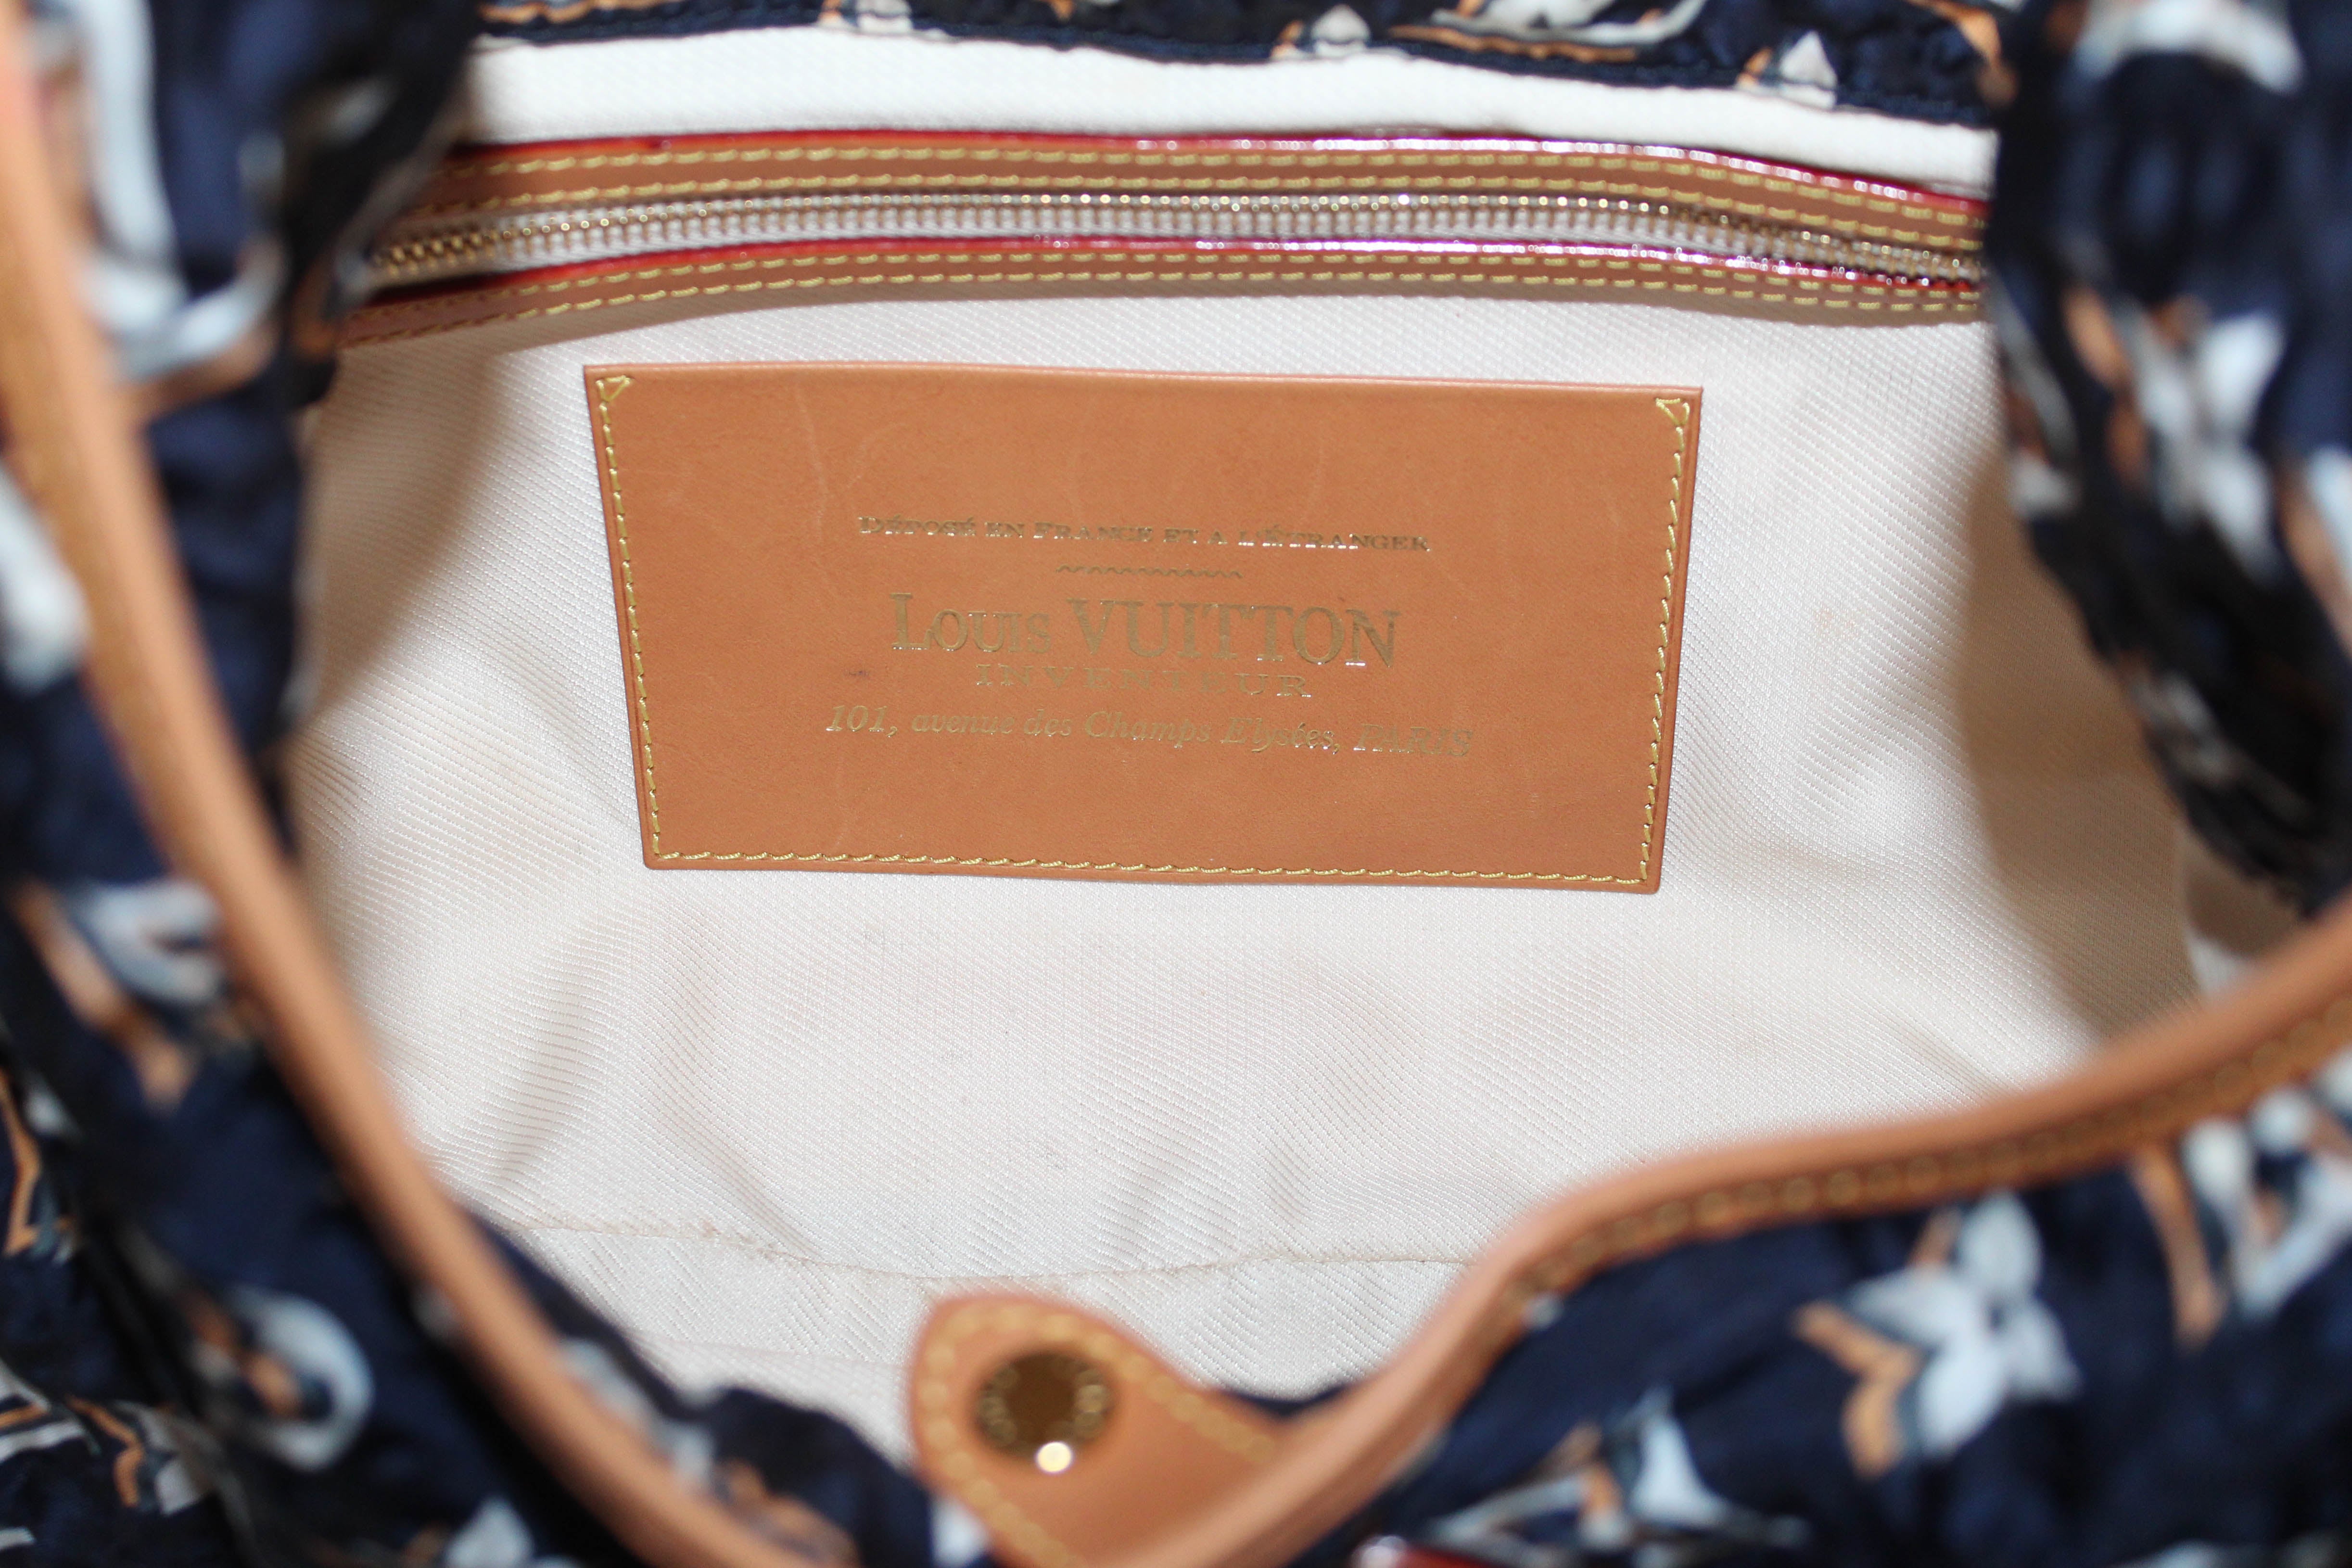 Louis Vuitton Navy Monogram Bulles MM Bag - Limited Edition